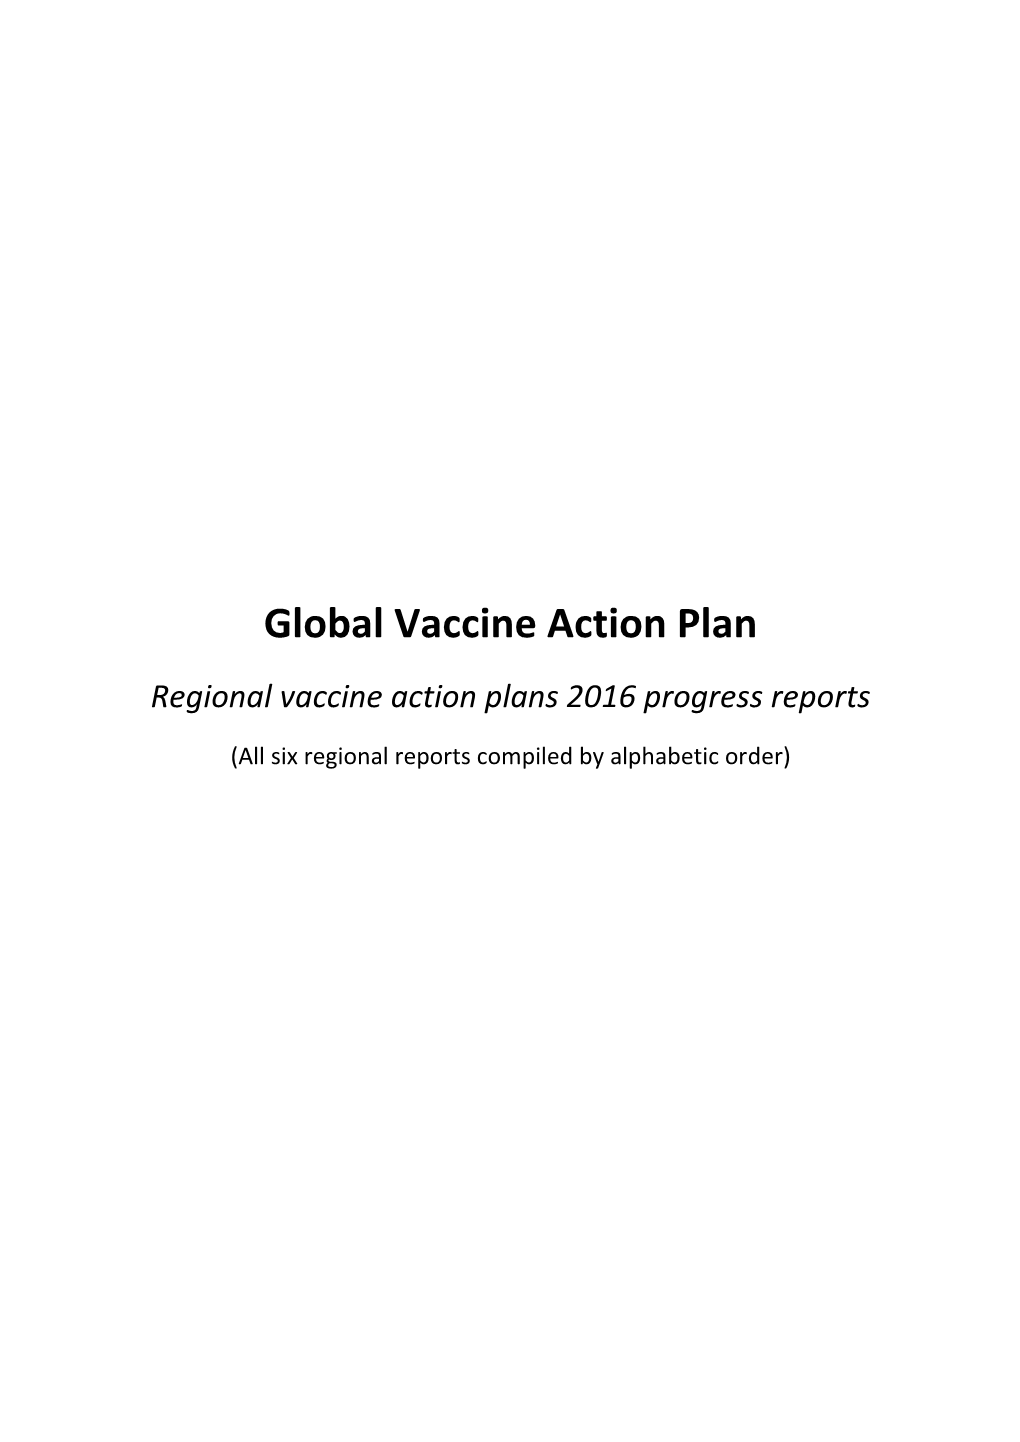 Regional Vaccine Action Plans 2016 Progress Reports